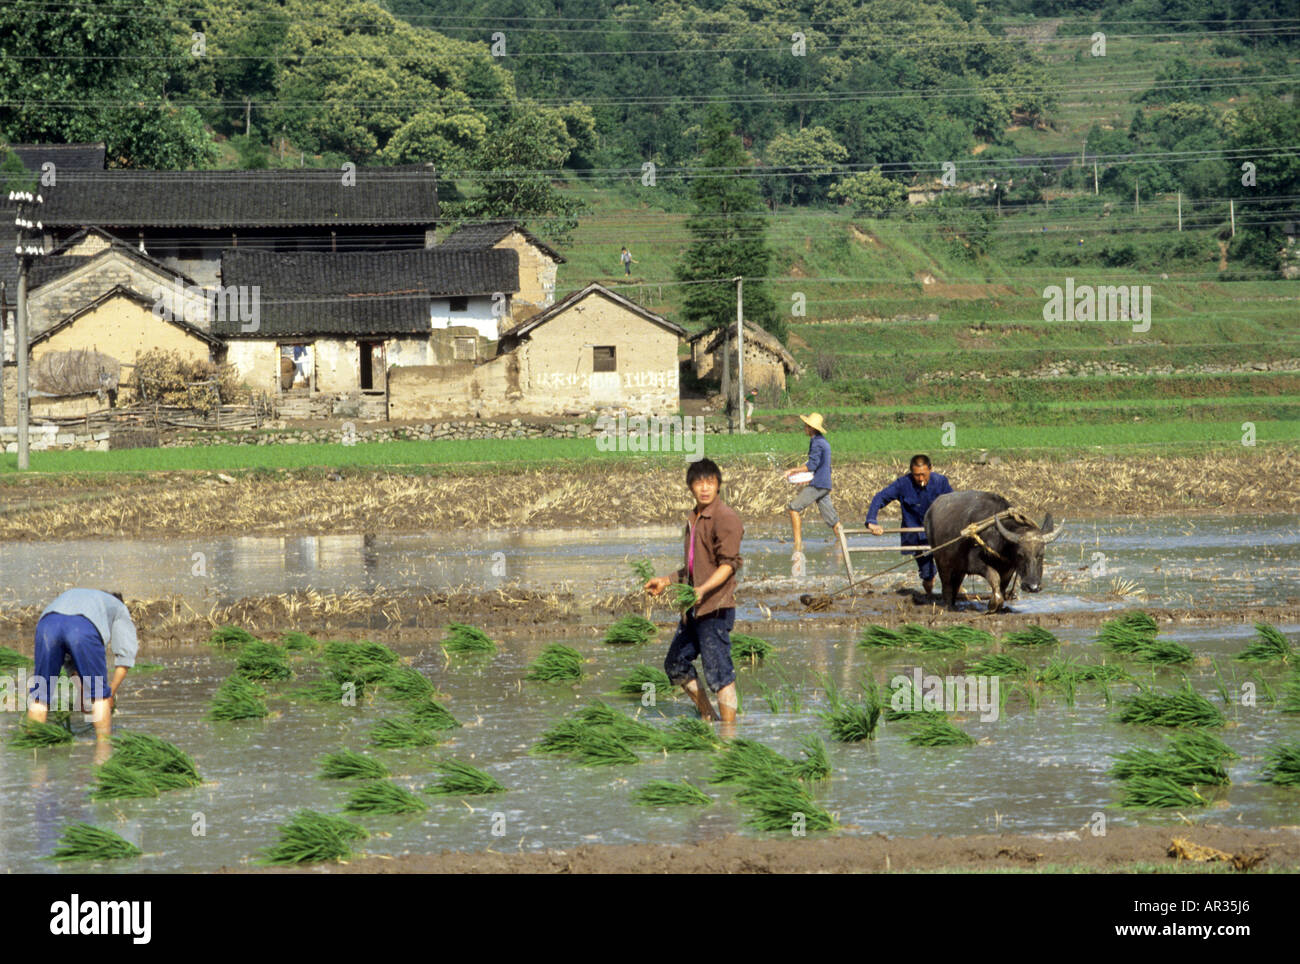 Village people working in their village rice paddies Stock Photo